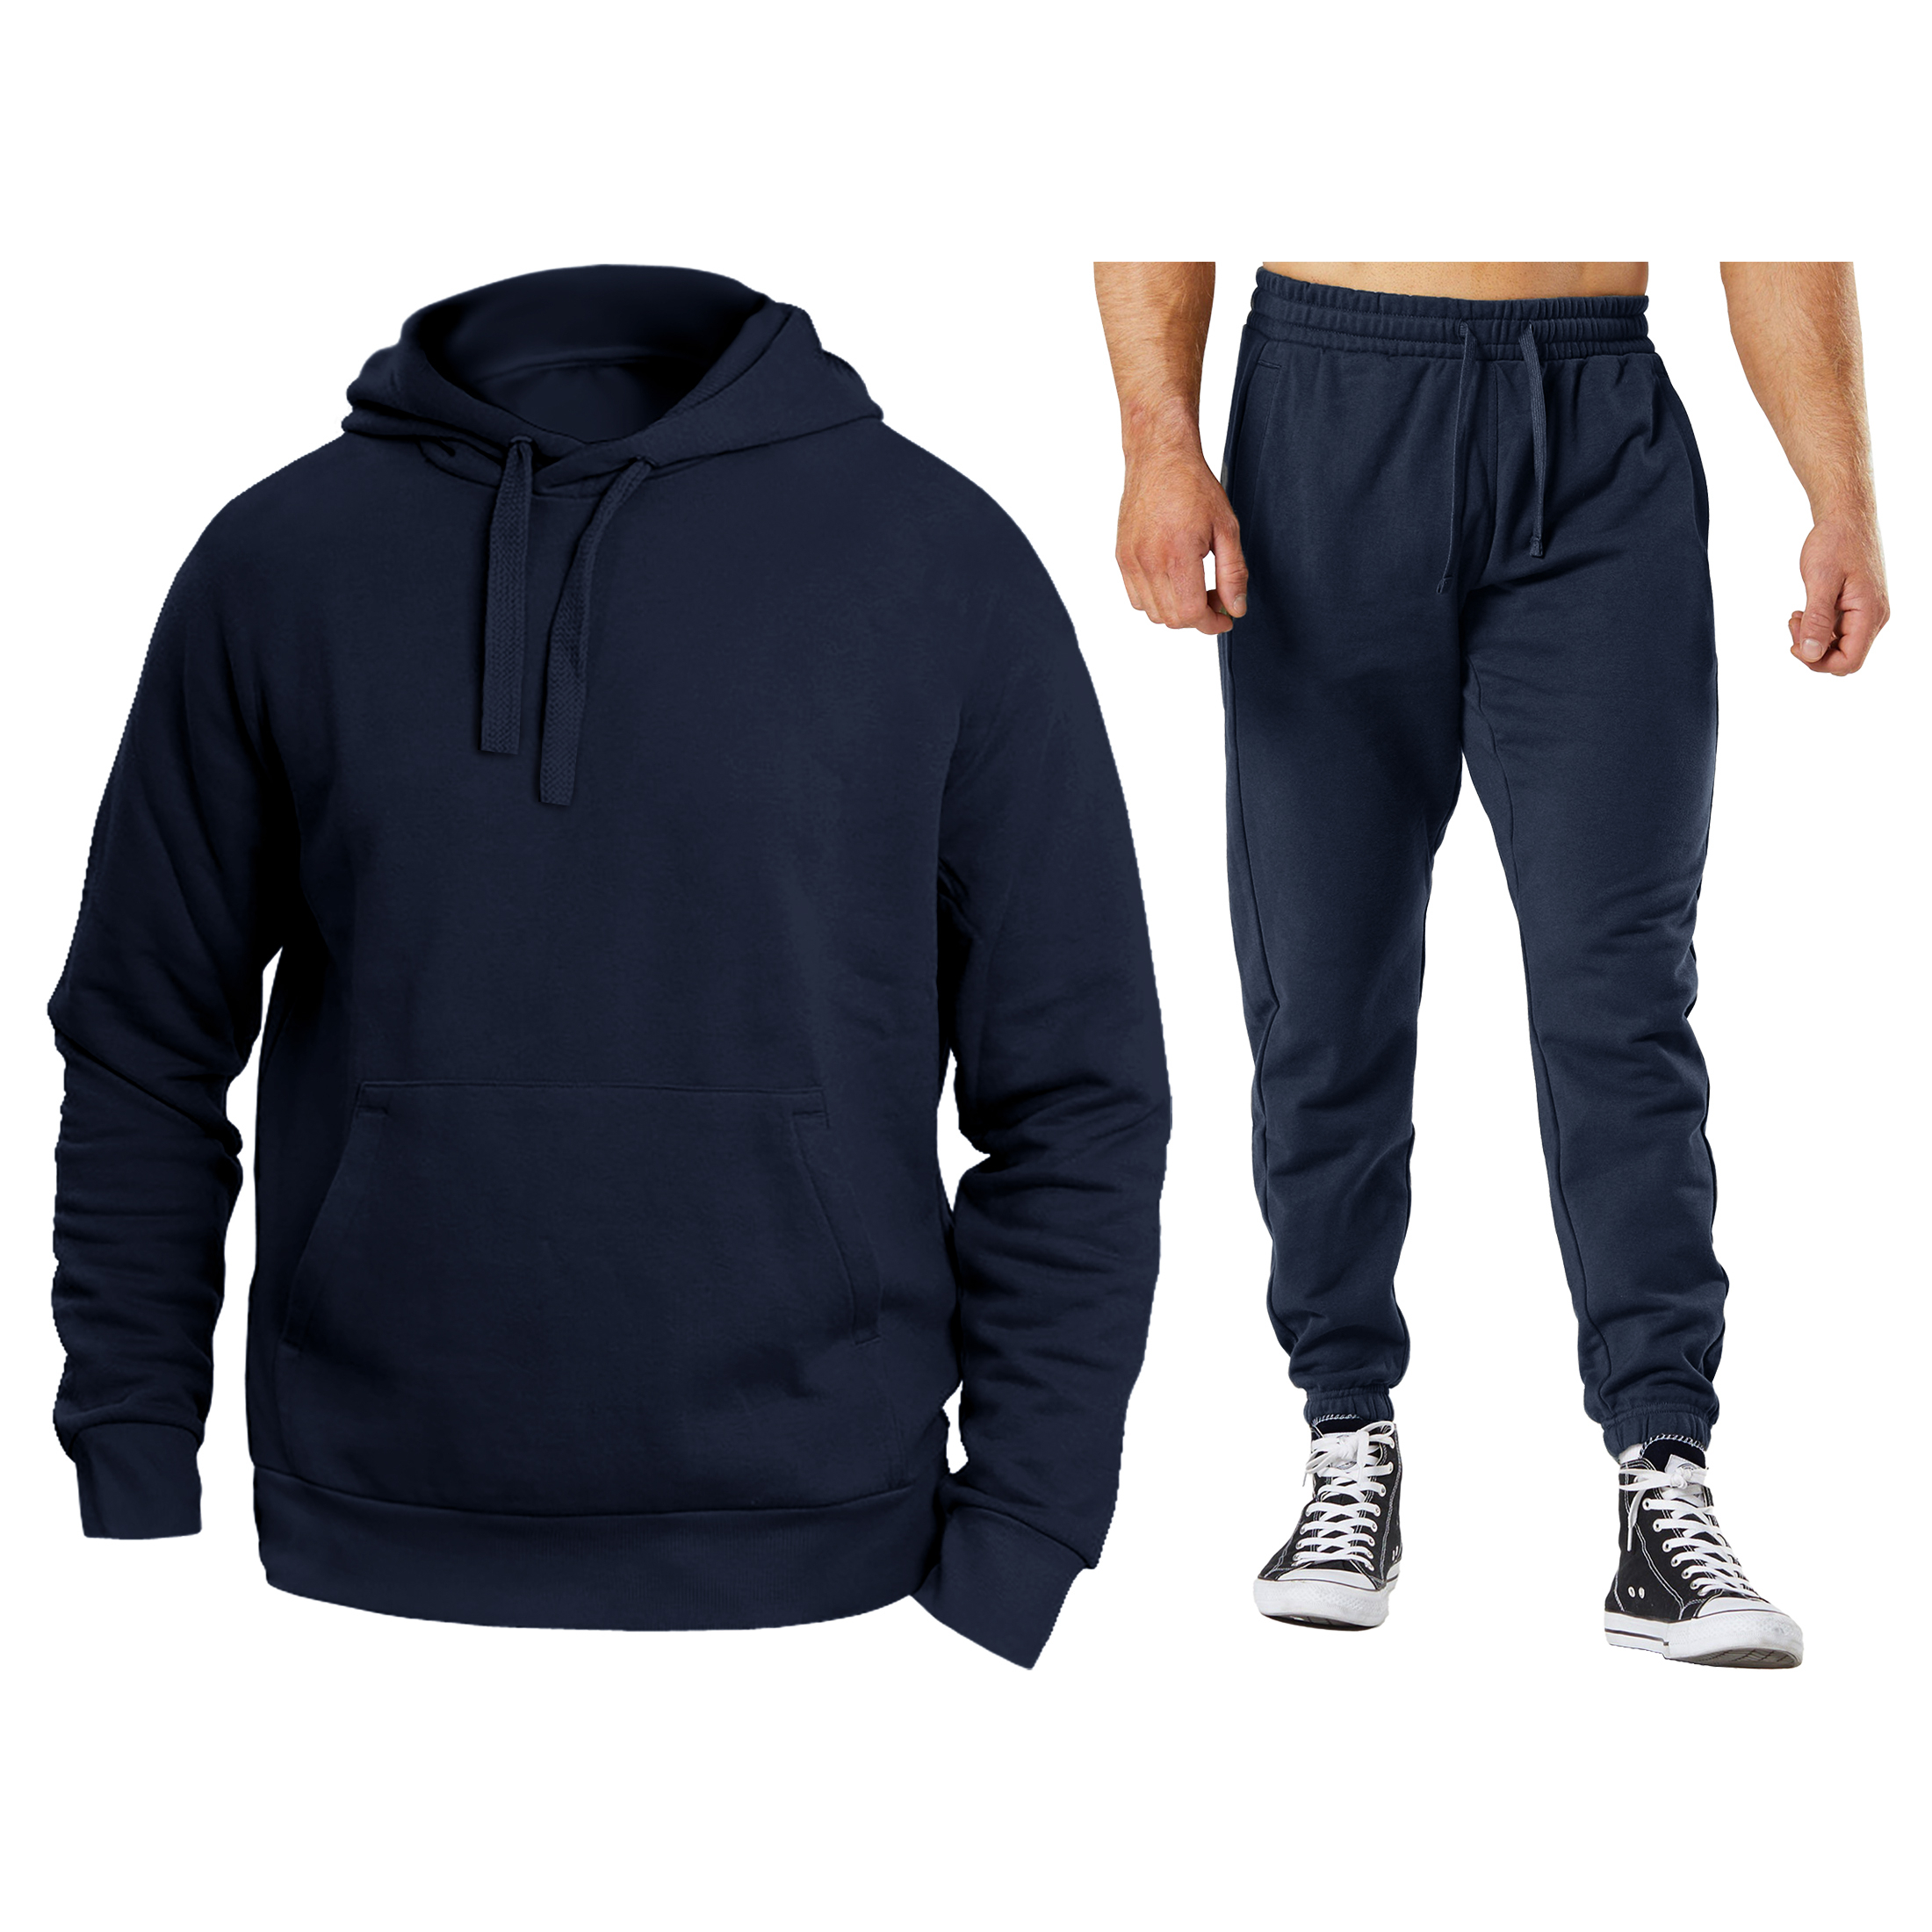 Men's Athletic Warm Jogging Pullover Active Sweatsuit - Grey, Small